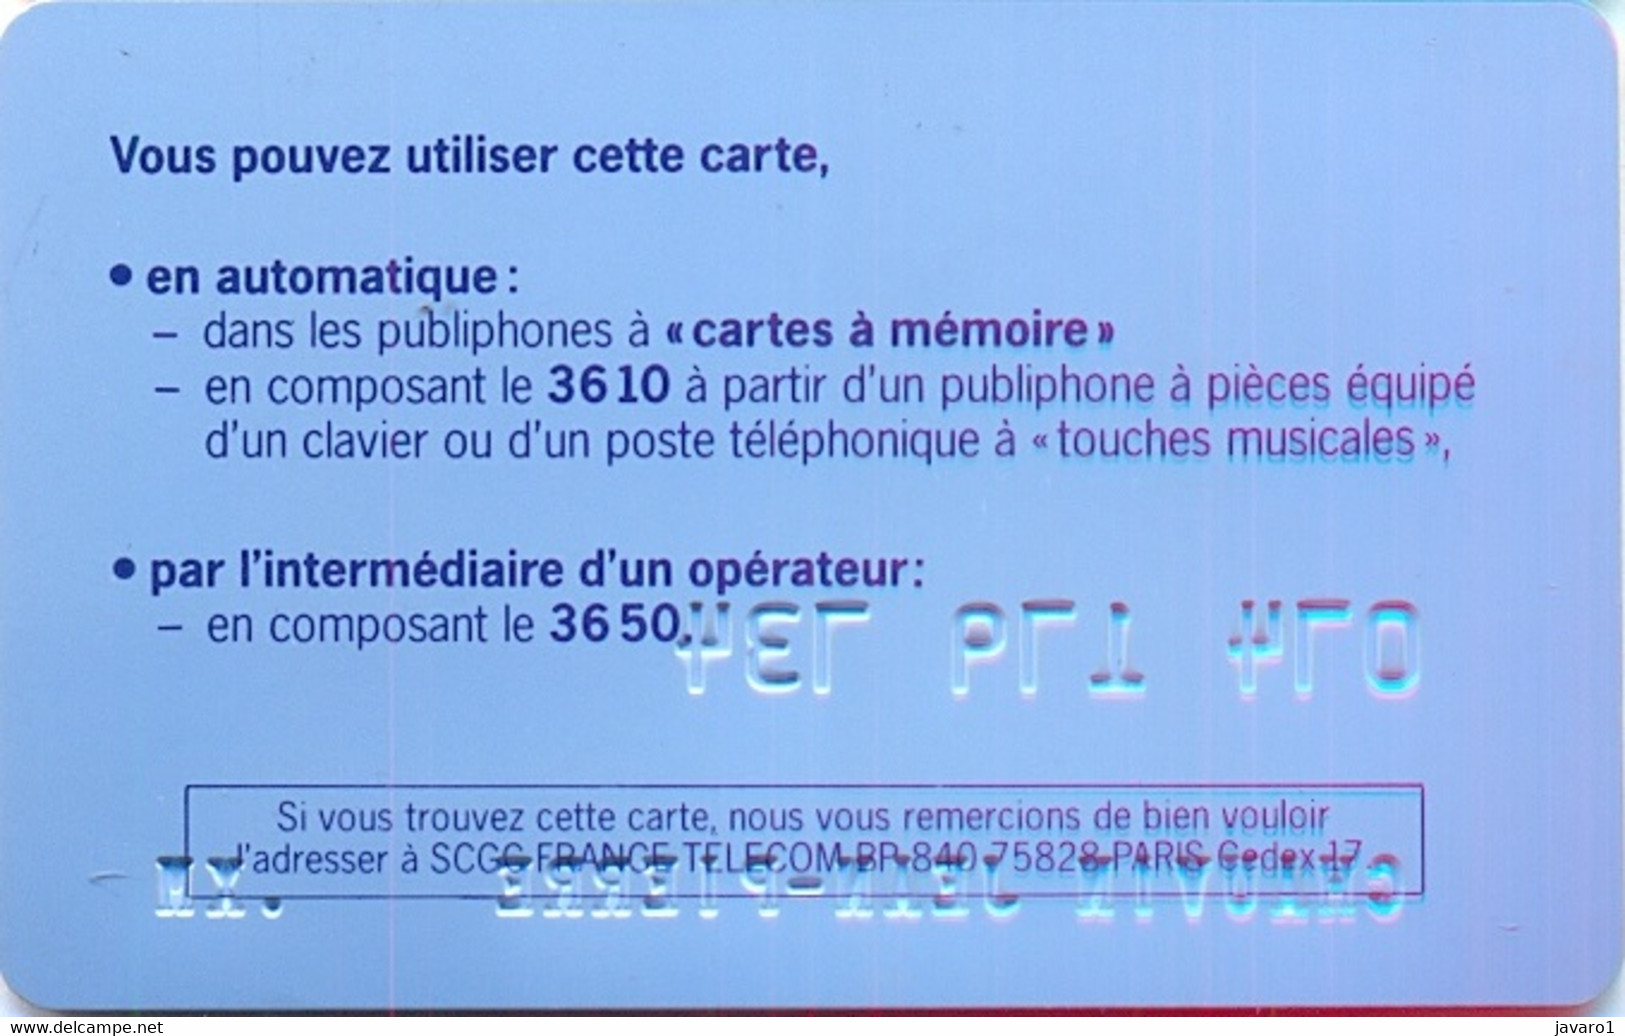 FRANCE : FRA15 CARTE PASTEL NATIONALE BULL Big-1 Reverse 1 USED - Pastel Cards